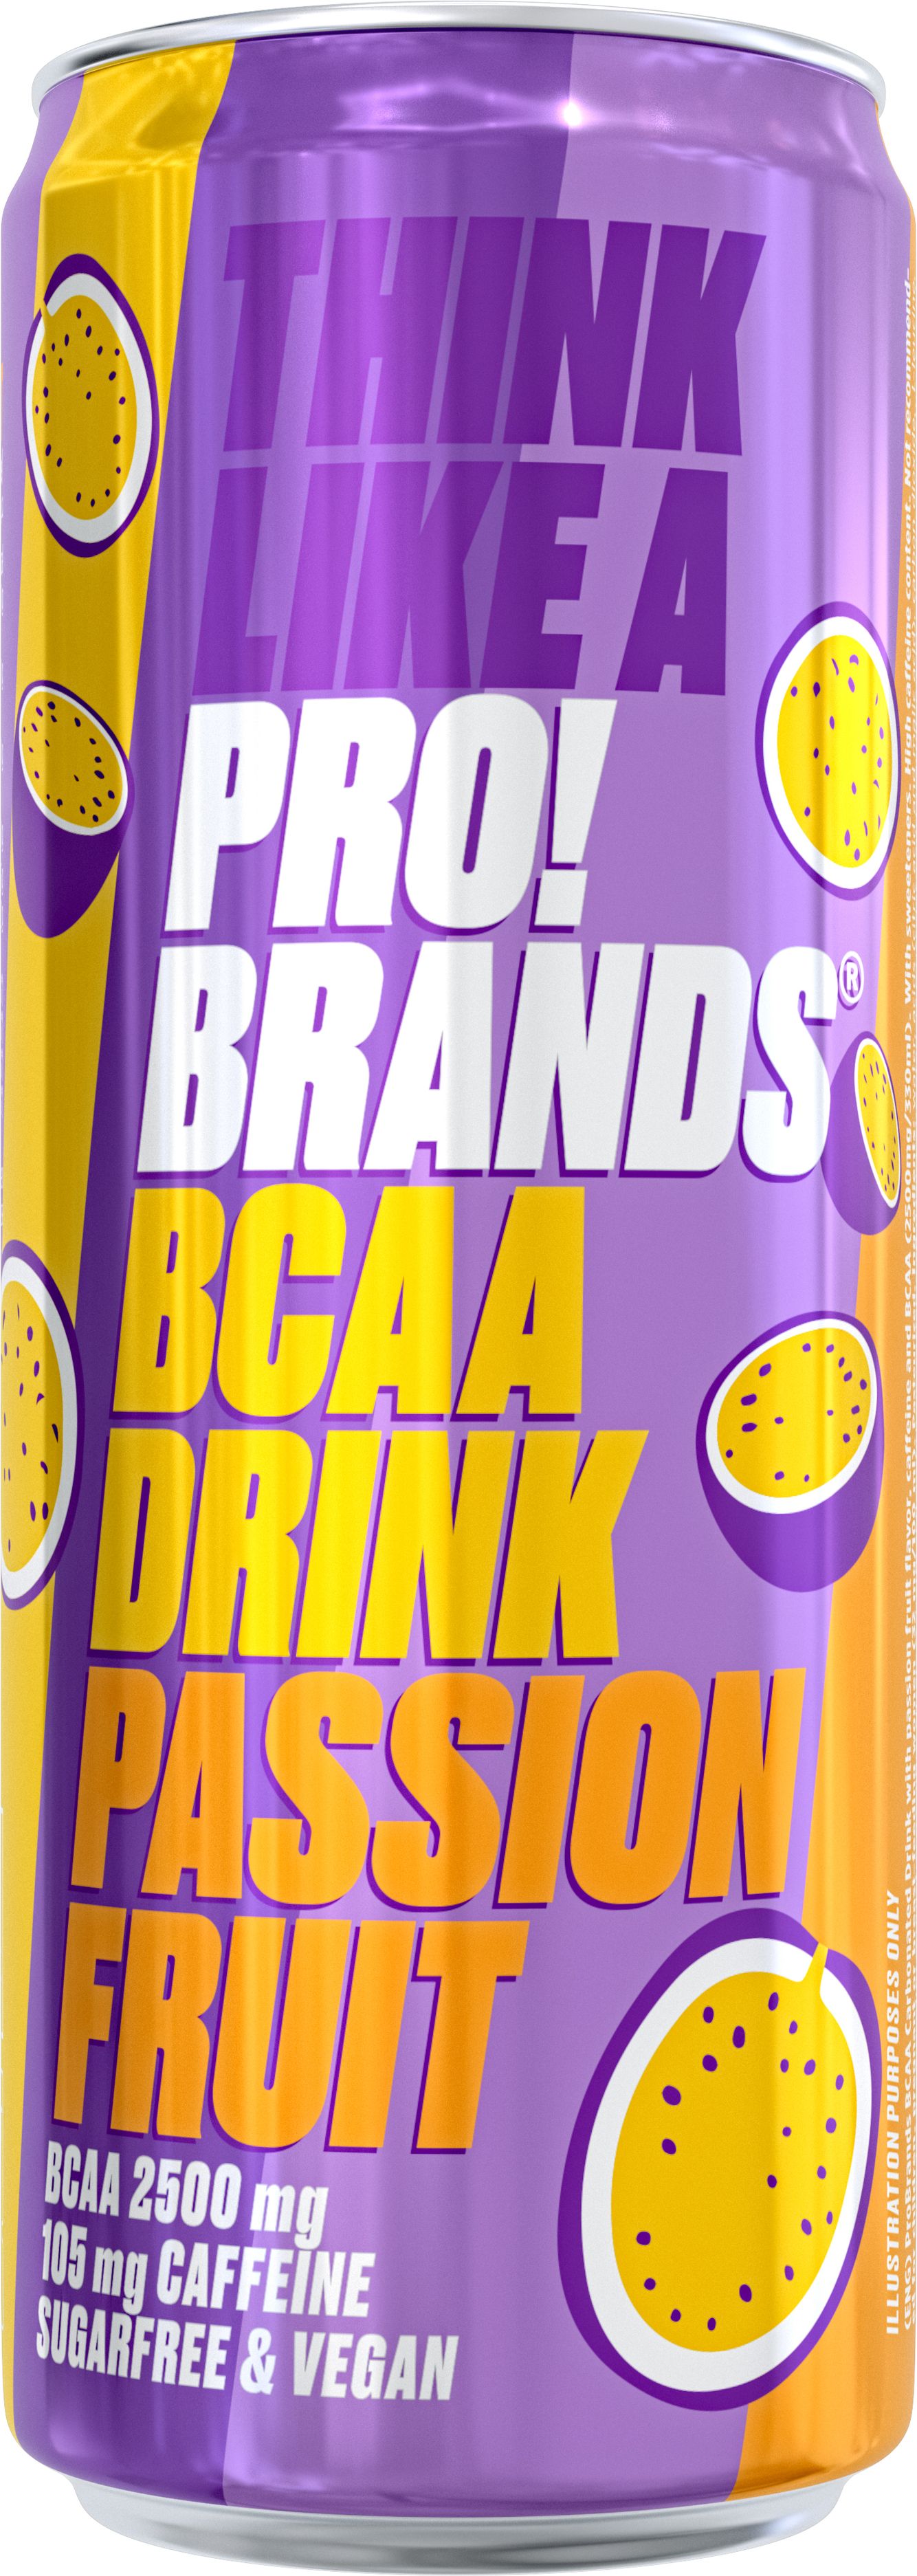 PROBRANDS BCAA Drink